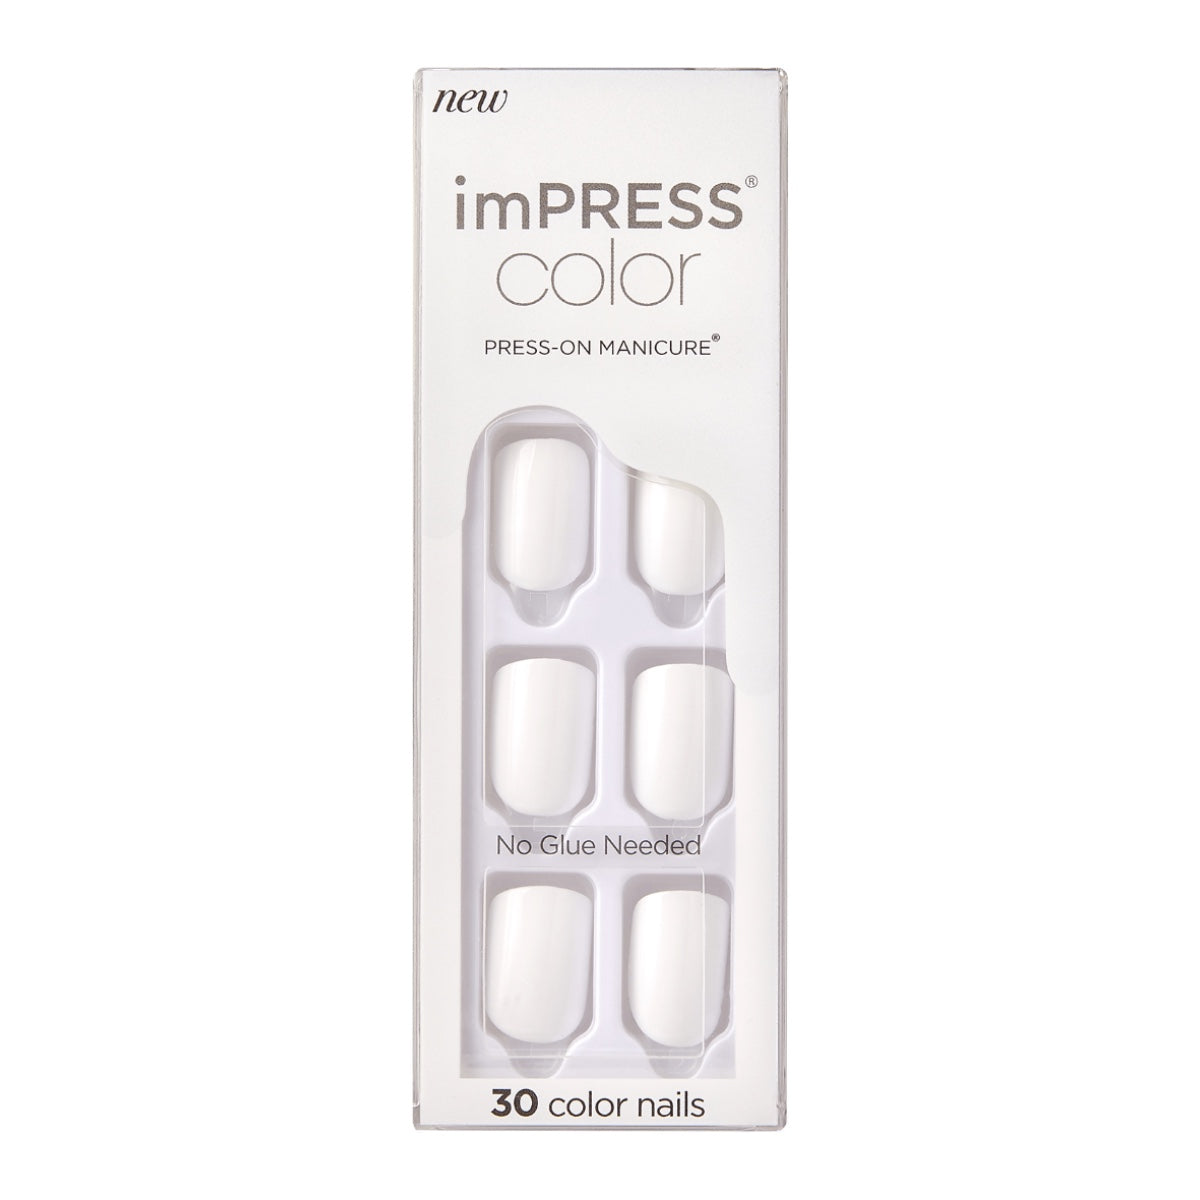 Kiss imPRESS Color Press-On Manicure | Frosting